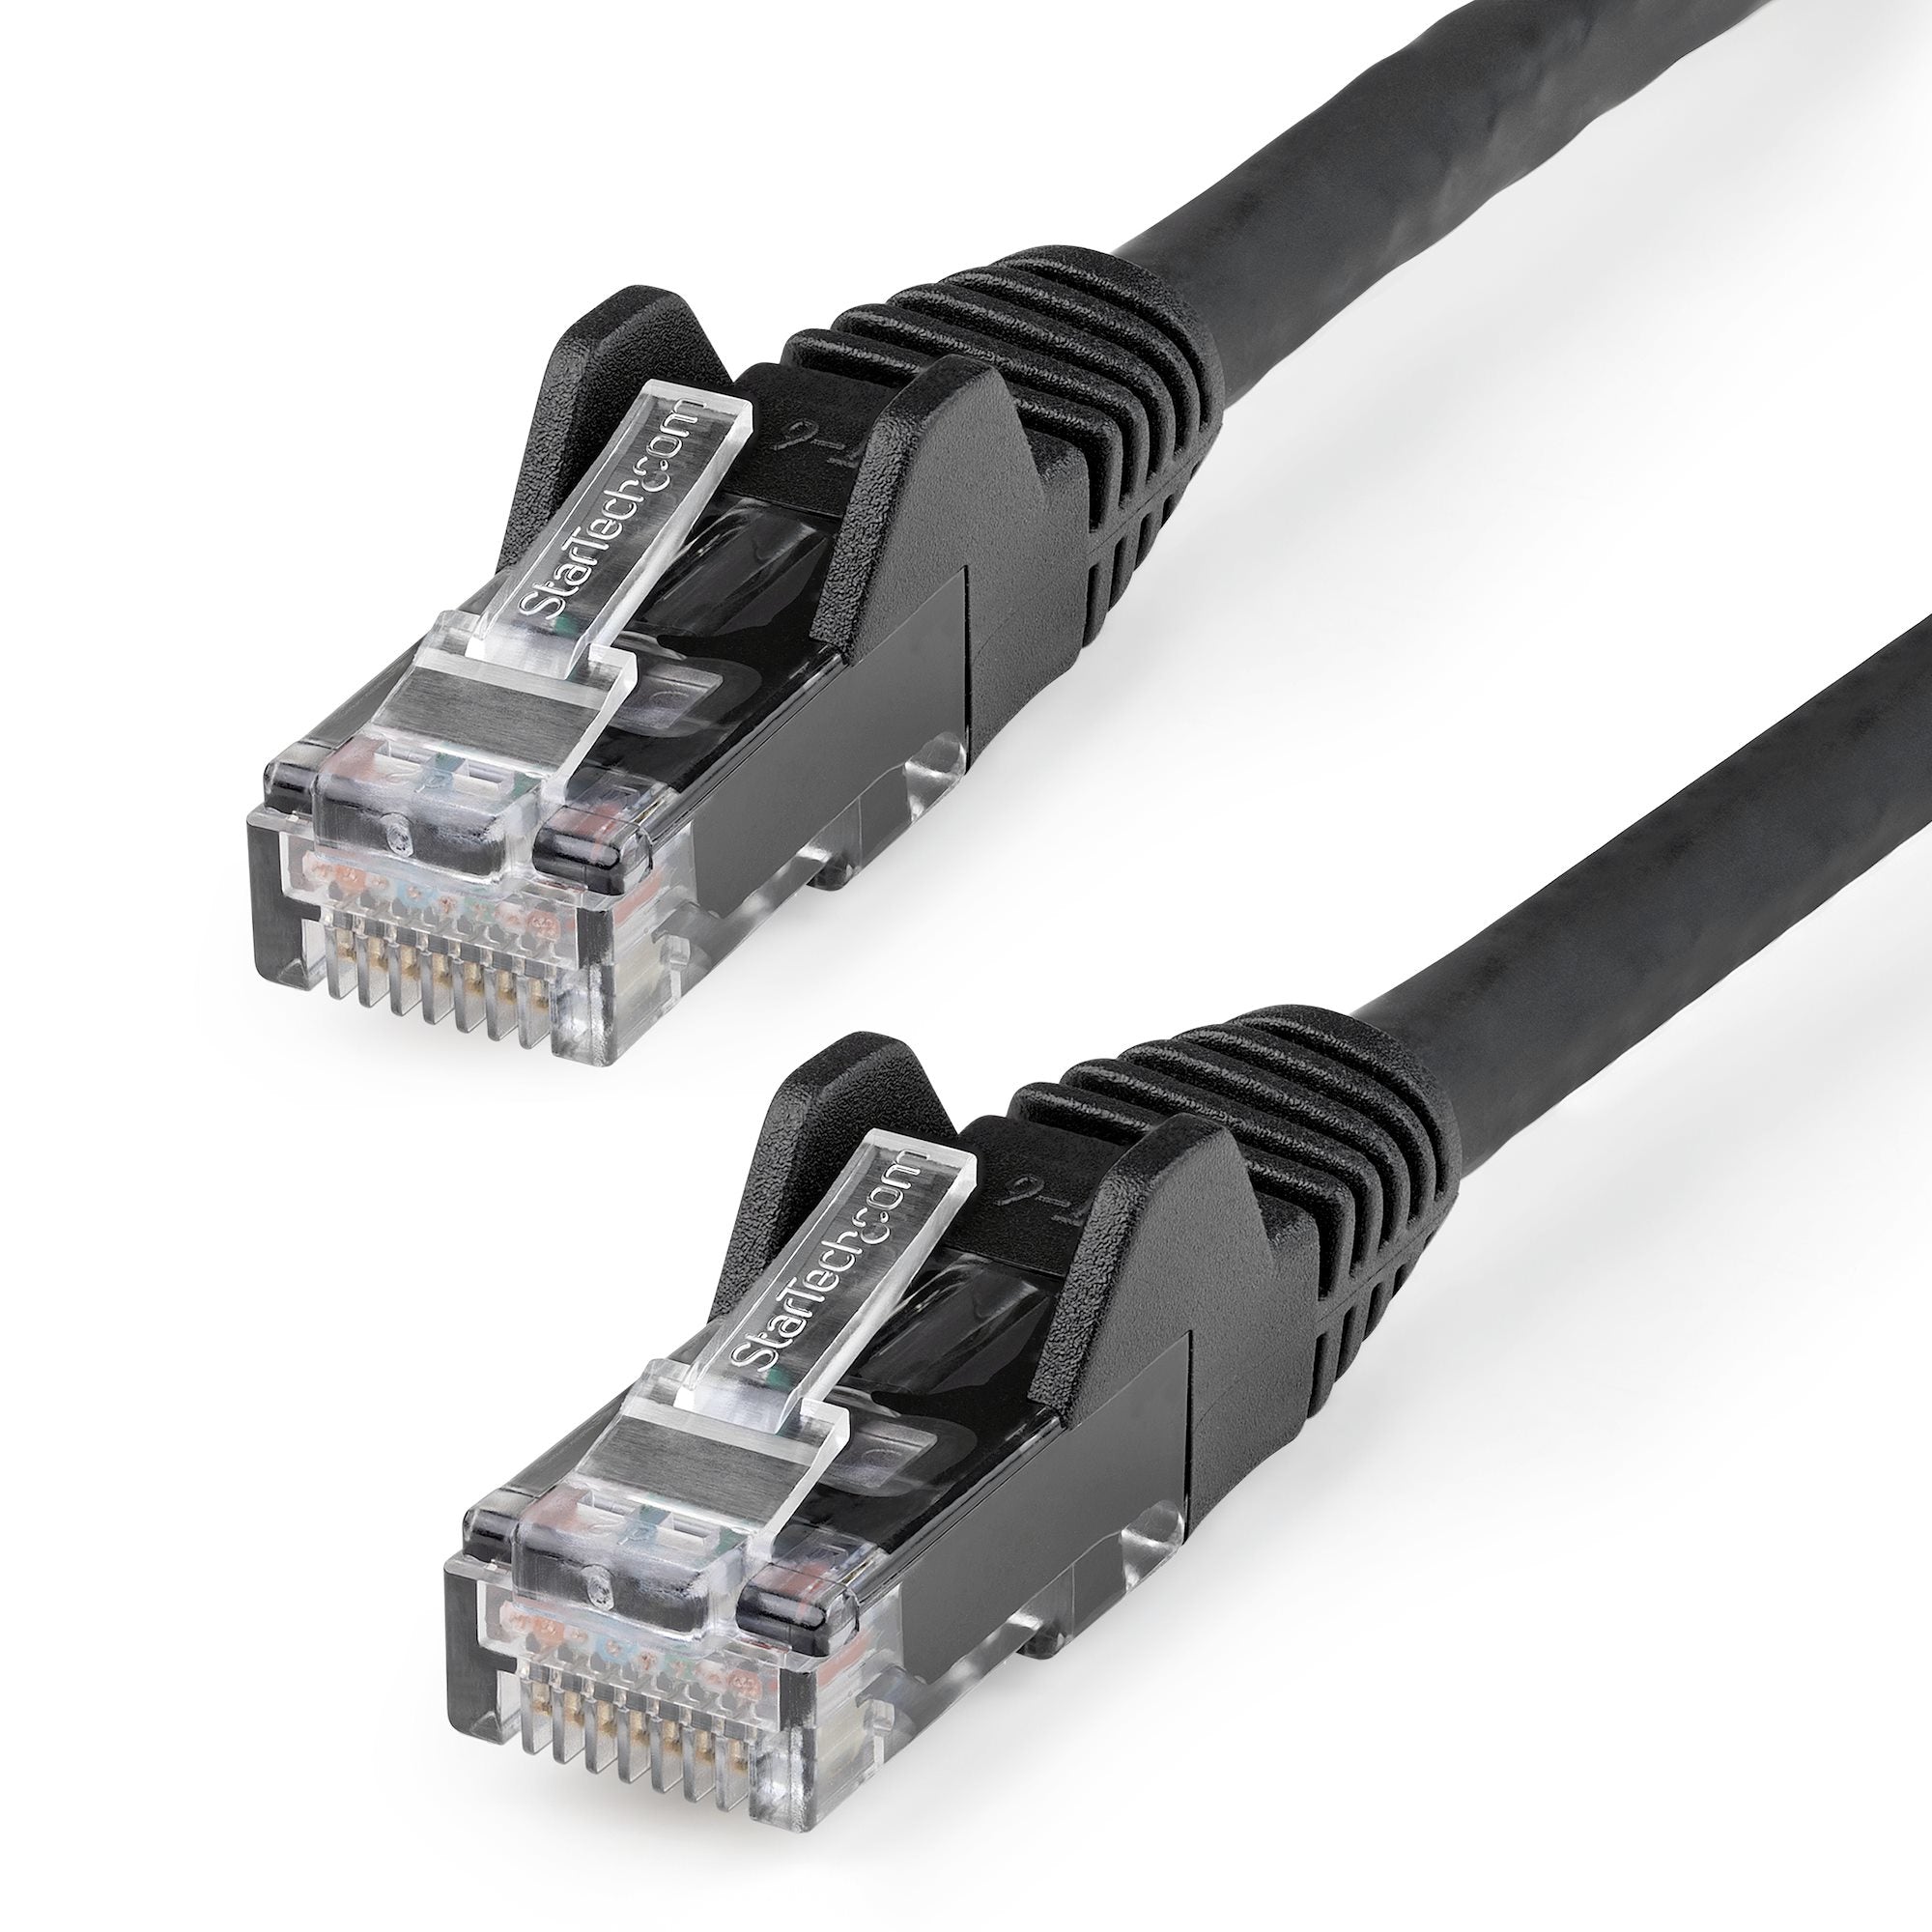 StarTech.com 5m CAT6 Ethernet Cable - LSZH (Low Smoke Zero Halogen) - 10 Gigabit 650MHz 100W PoE RJ45 10GbE UTP Network Patch Cord Snagless with Strain Relief - Black, CAT 6, ETL Verified, 24AWG